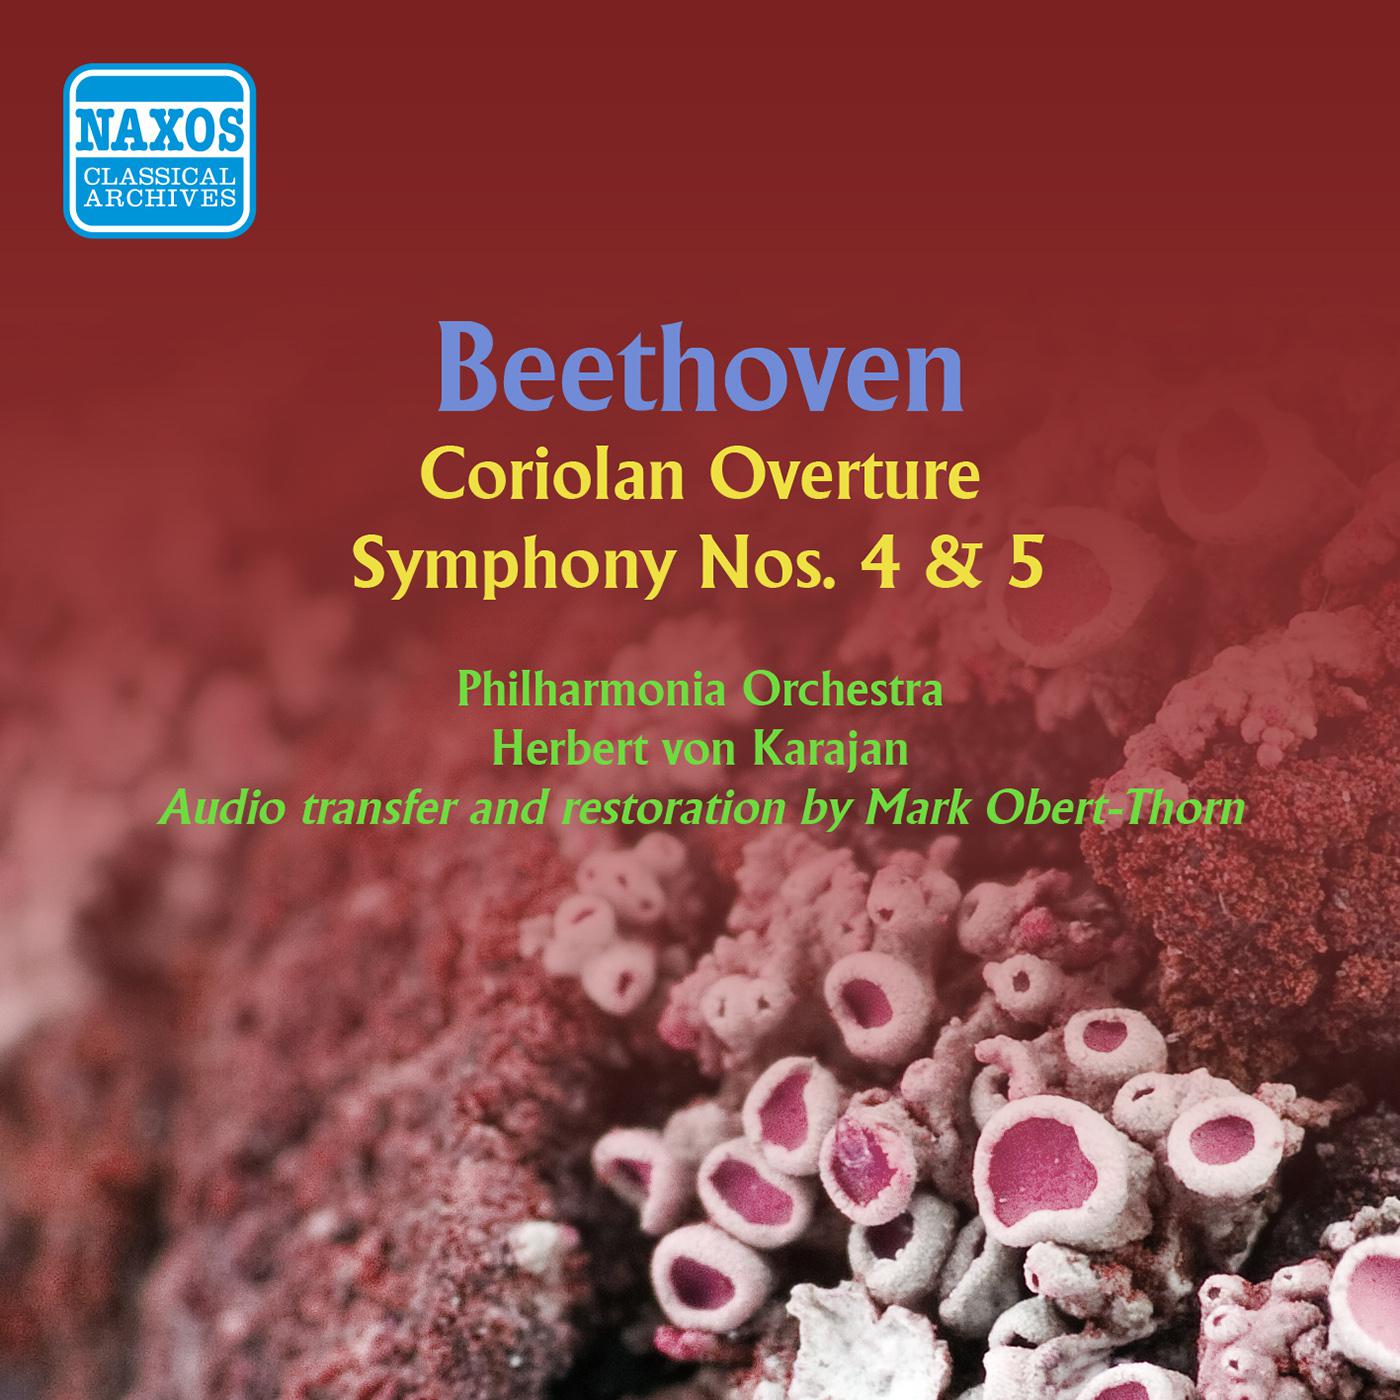 BEETHOVEN, L. van: Symphonies Nos. 4 and 5 / Coriolan Overture (Philharmonia Orchestra, Karajan) (1953, 1954)